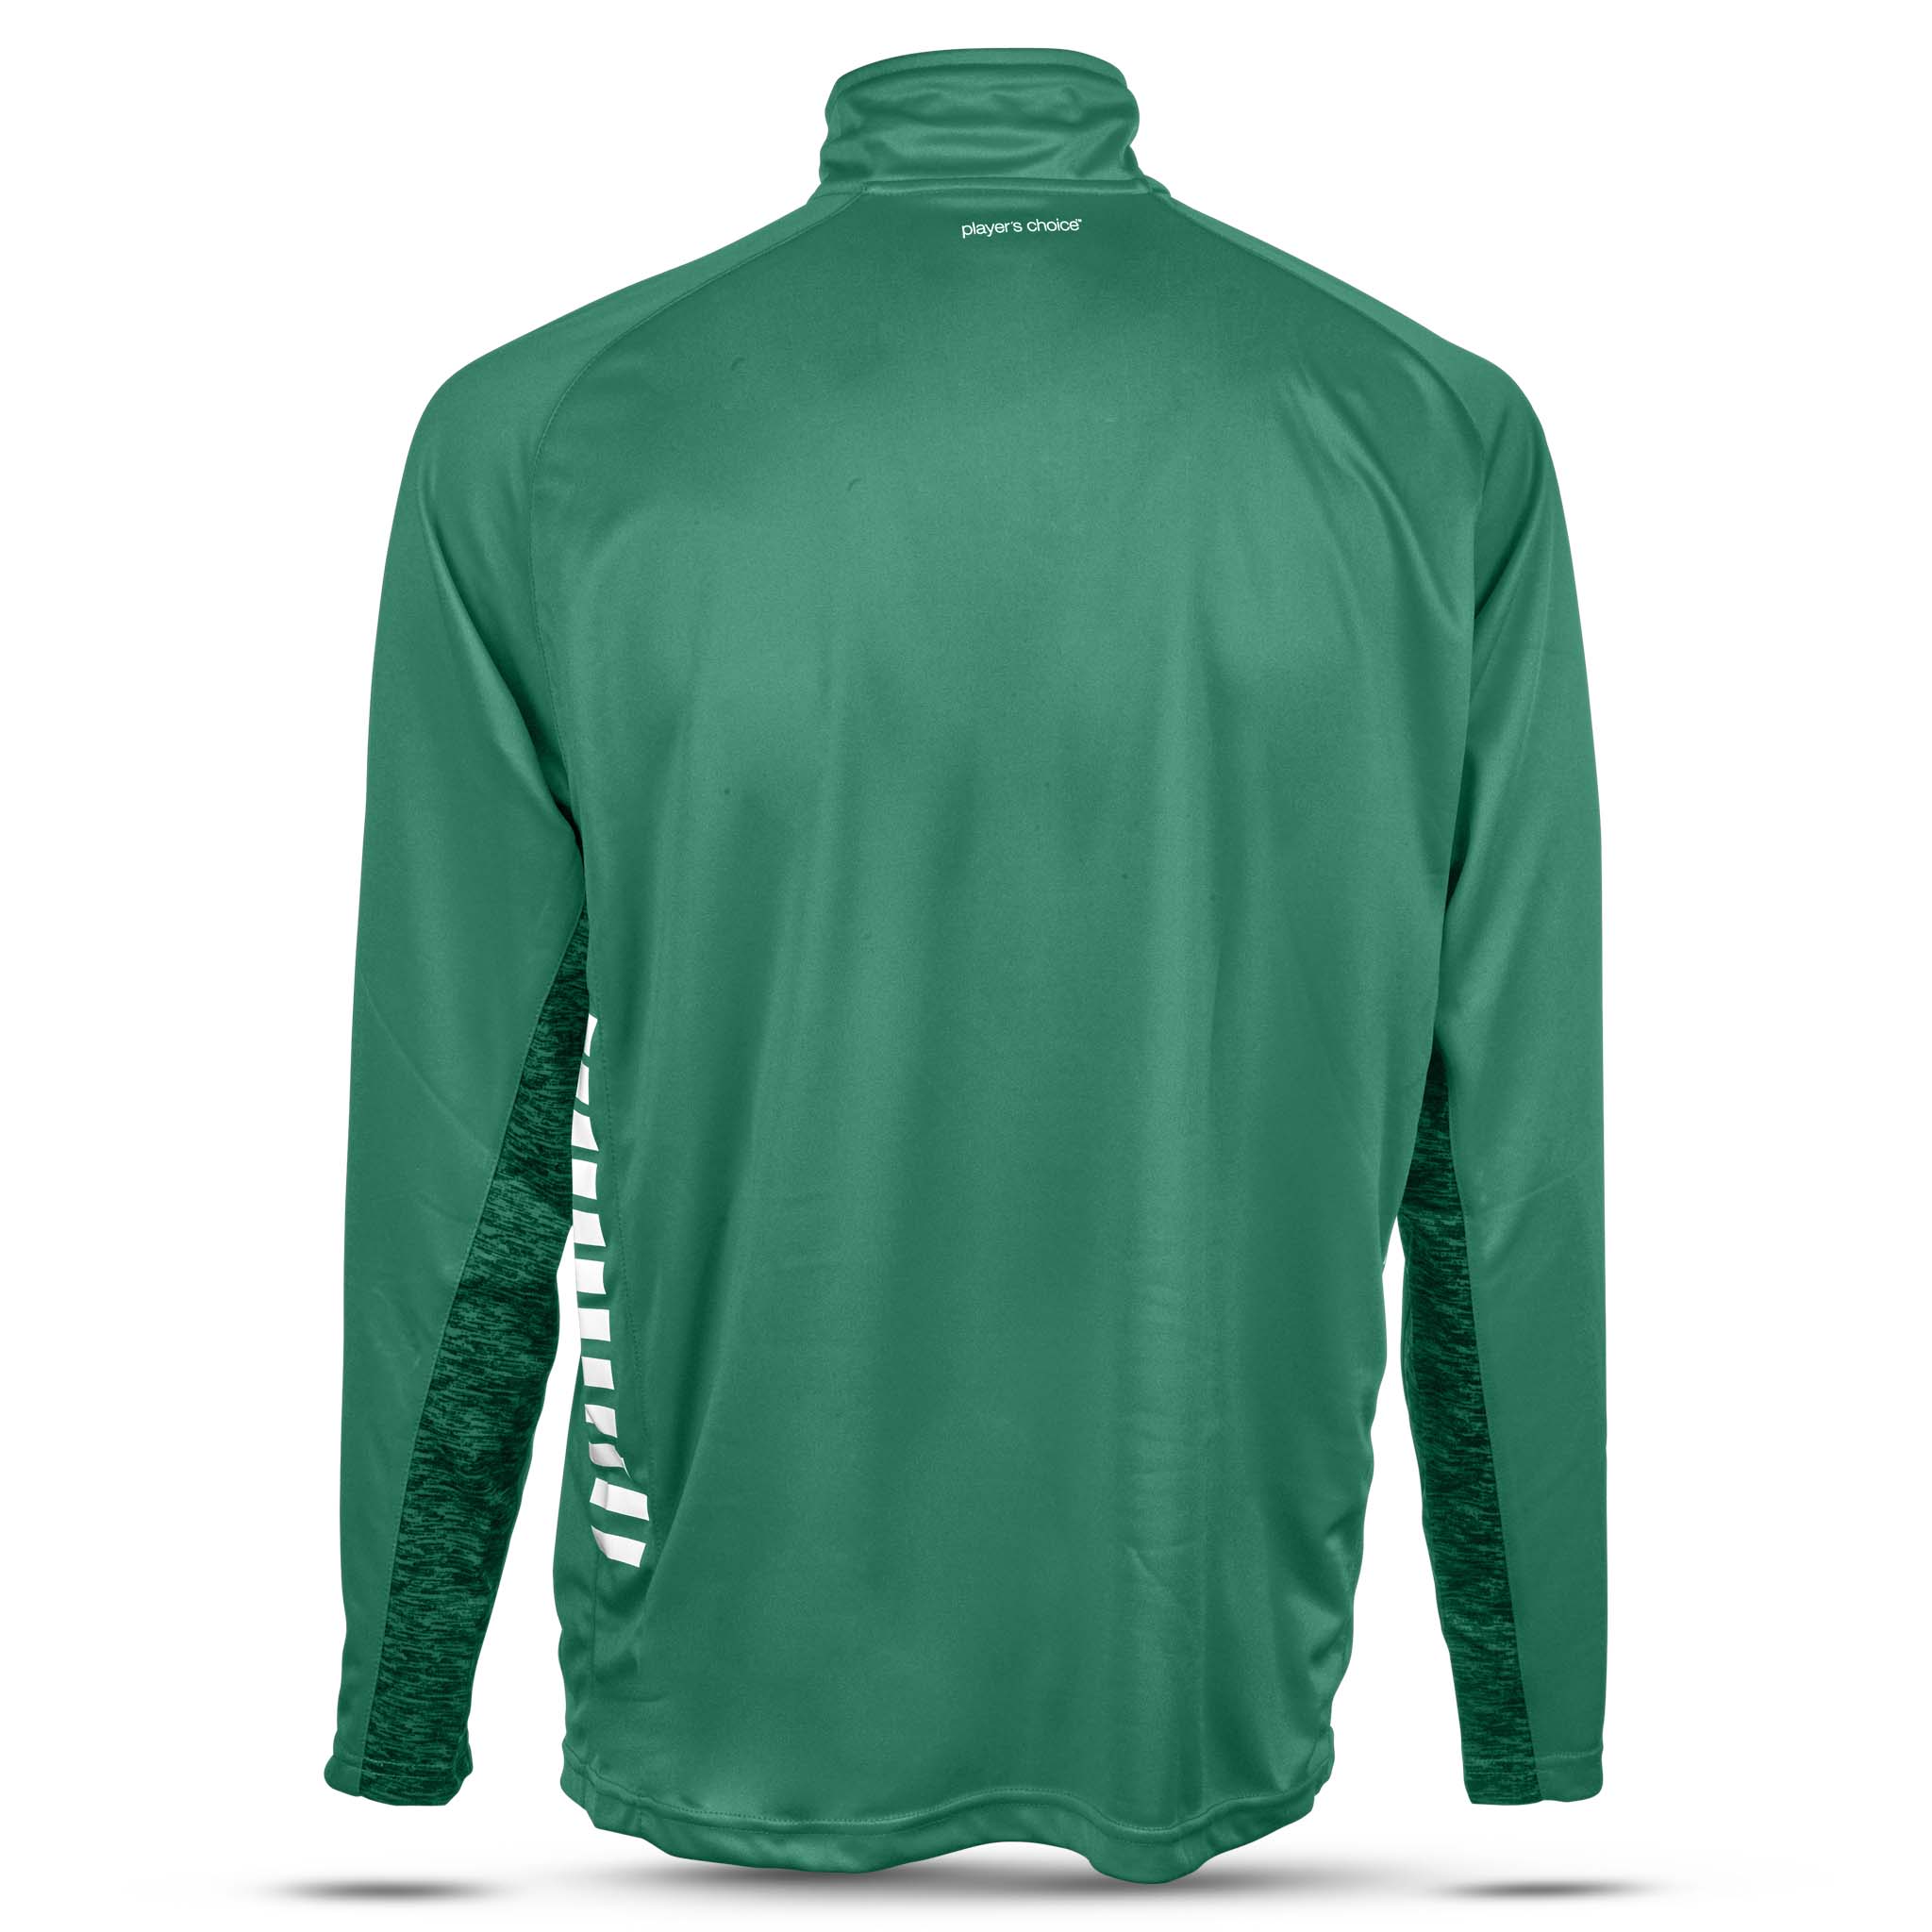 spain Träning sweatshirt 1/2 zip #färg_grön